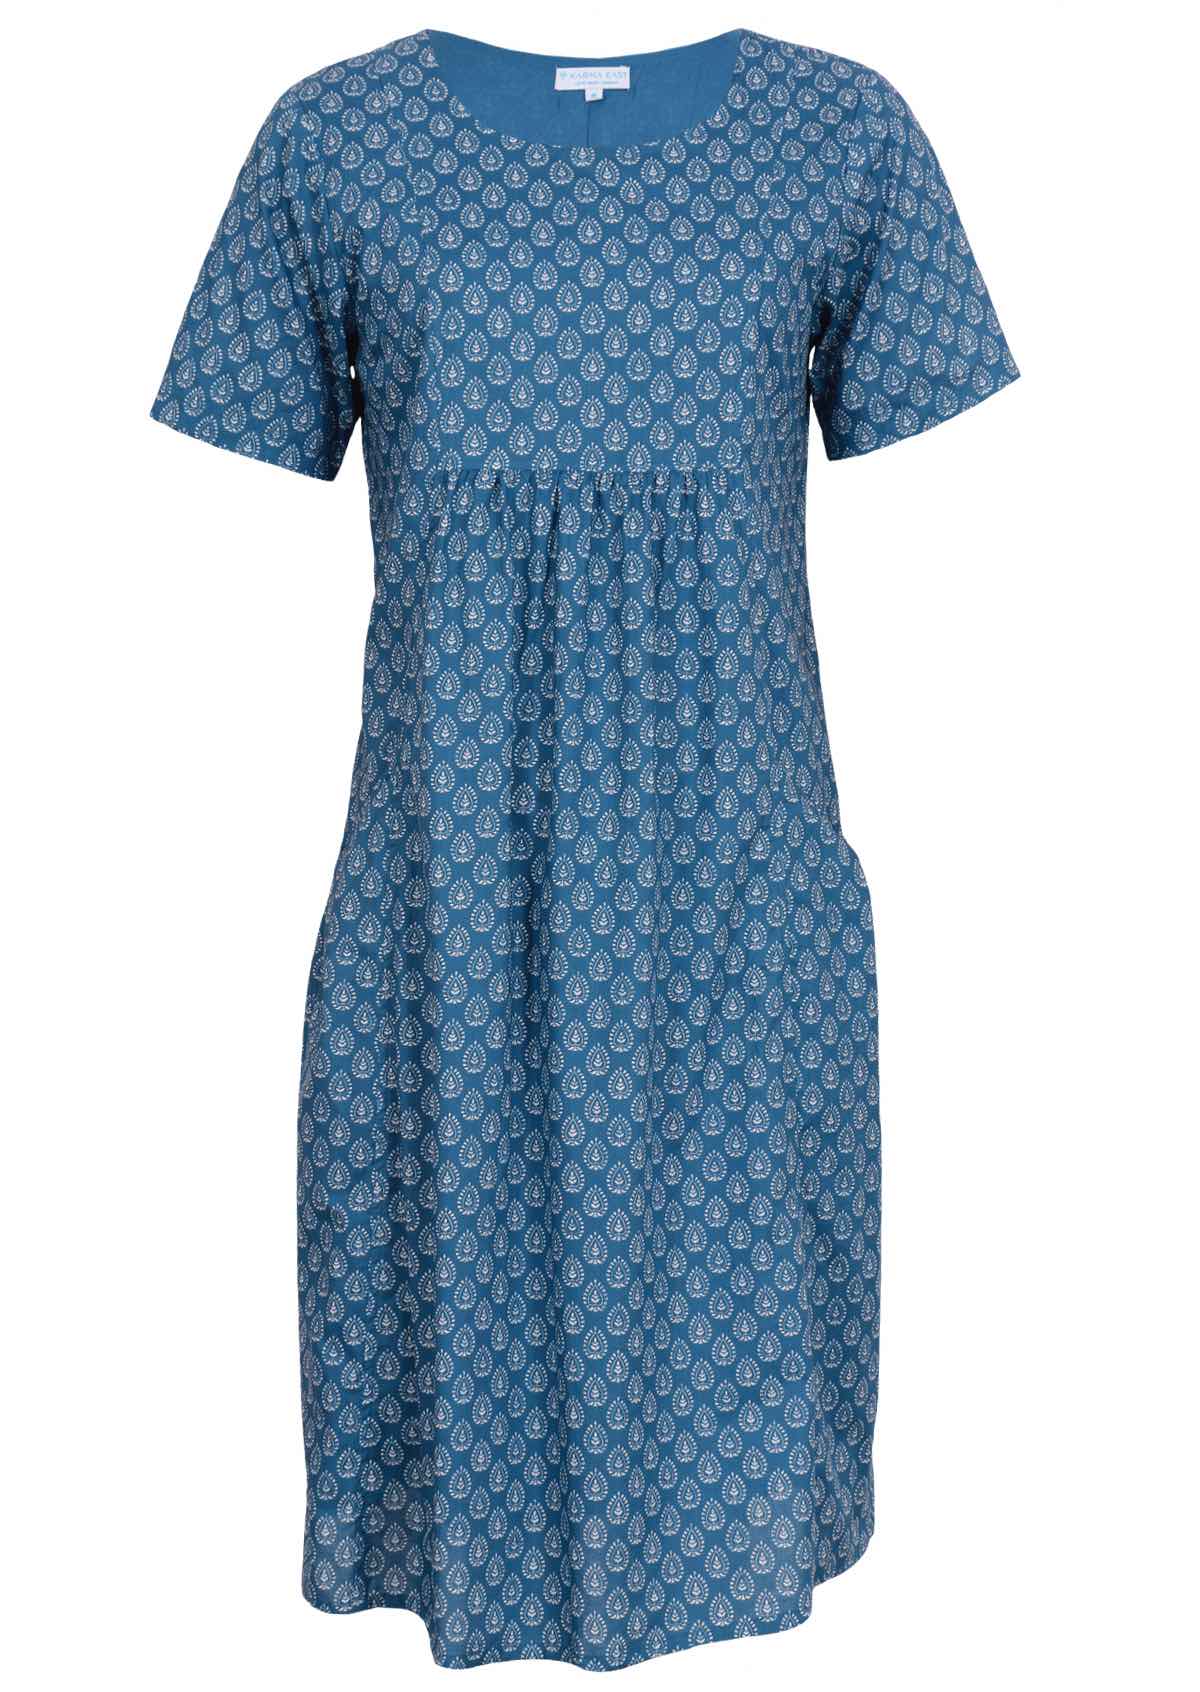 Blue based 100% cotton dress features a square yoke bib. 